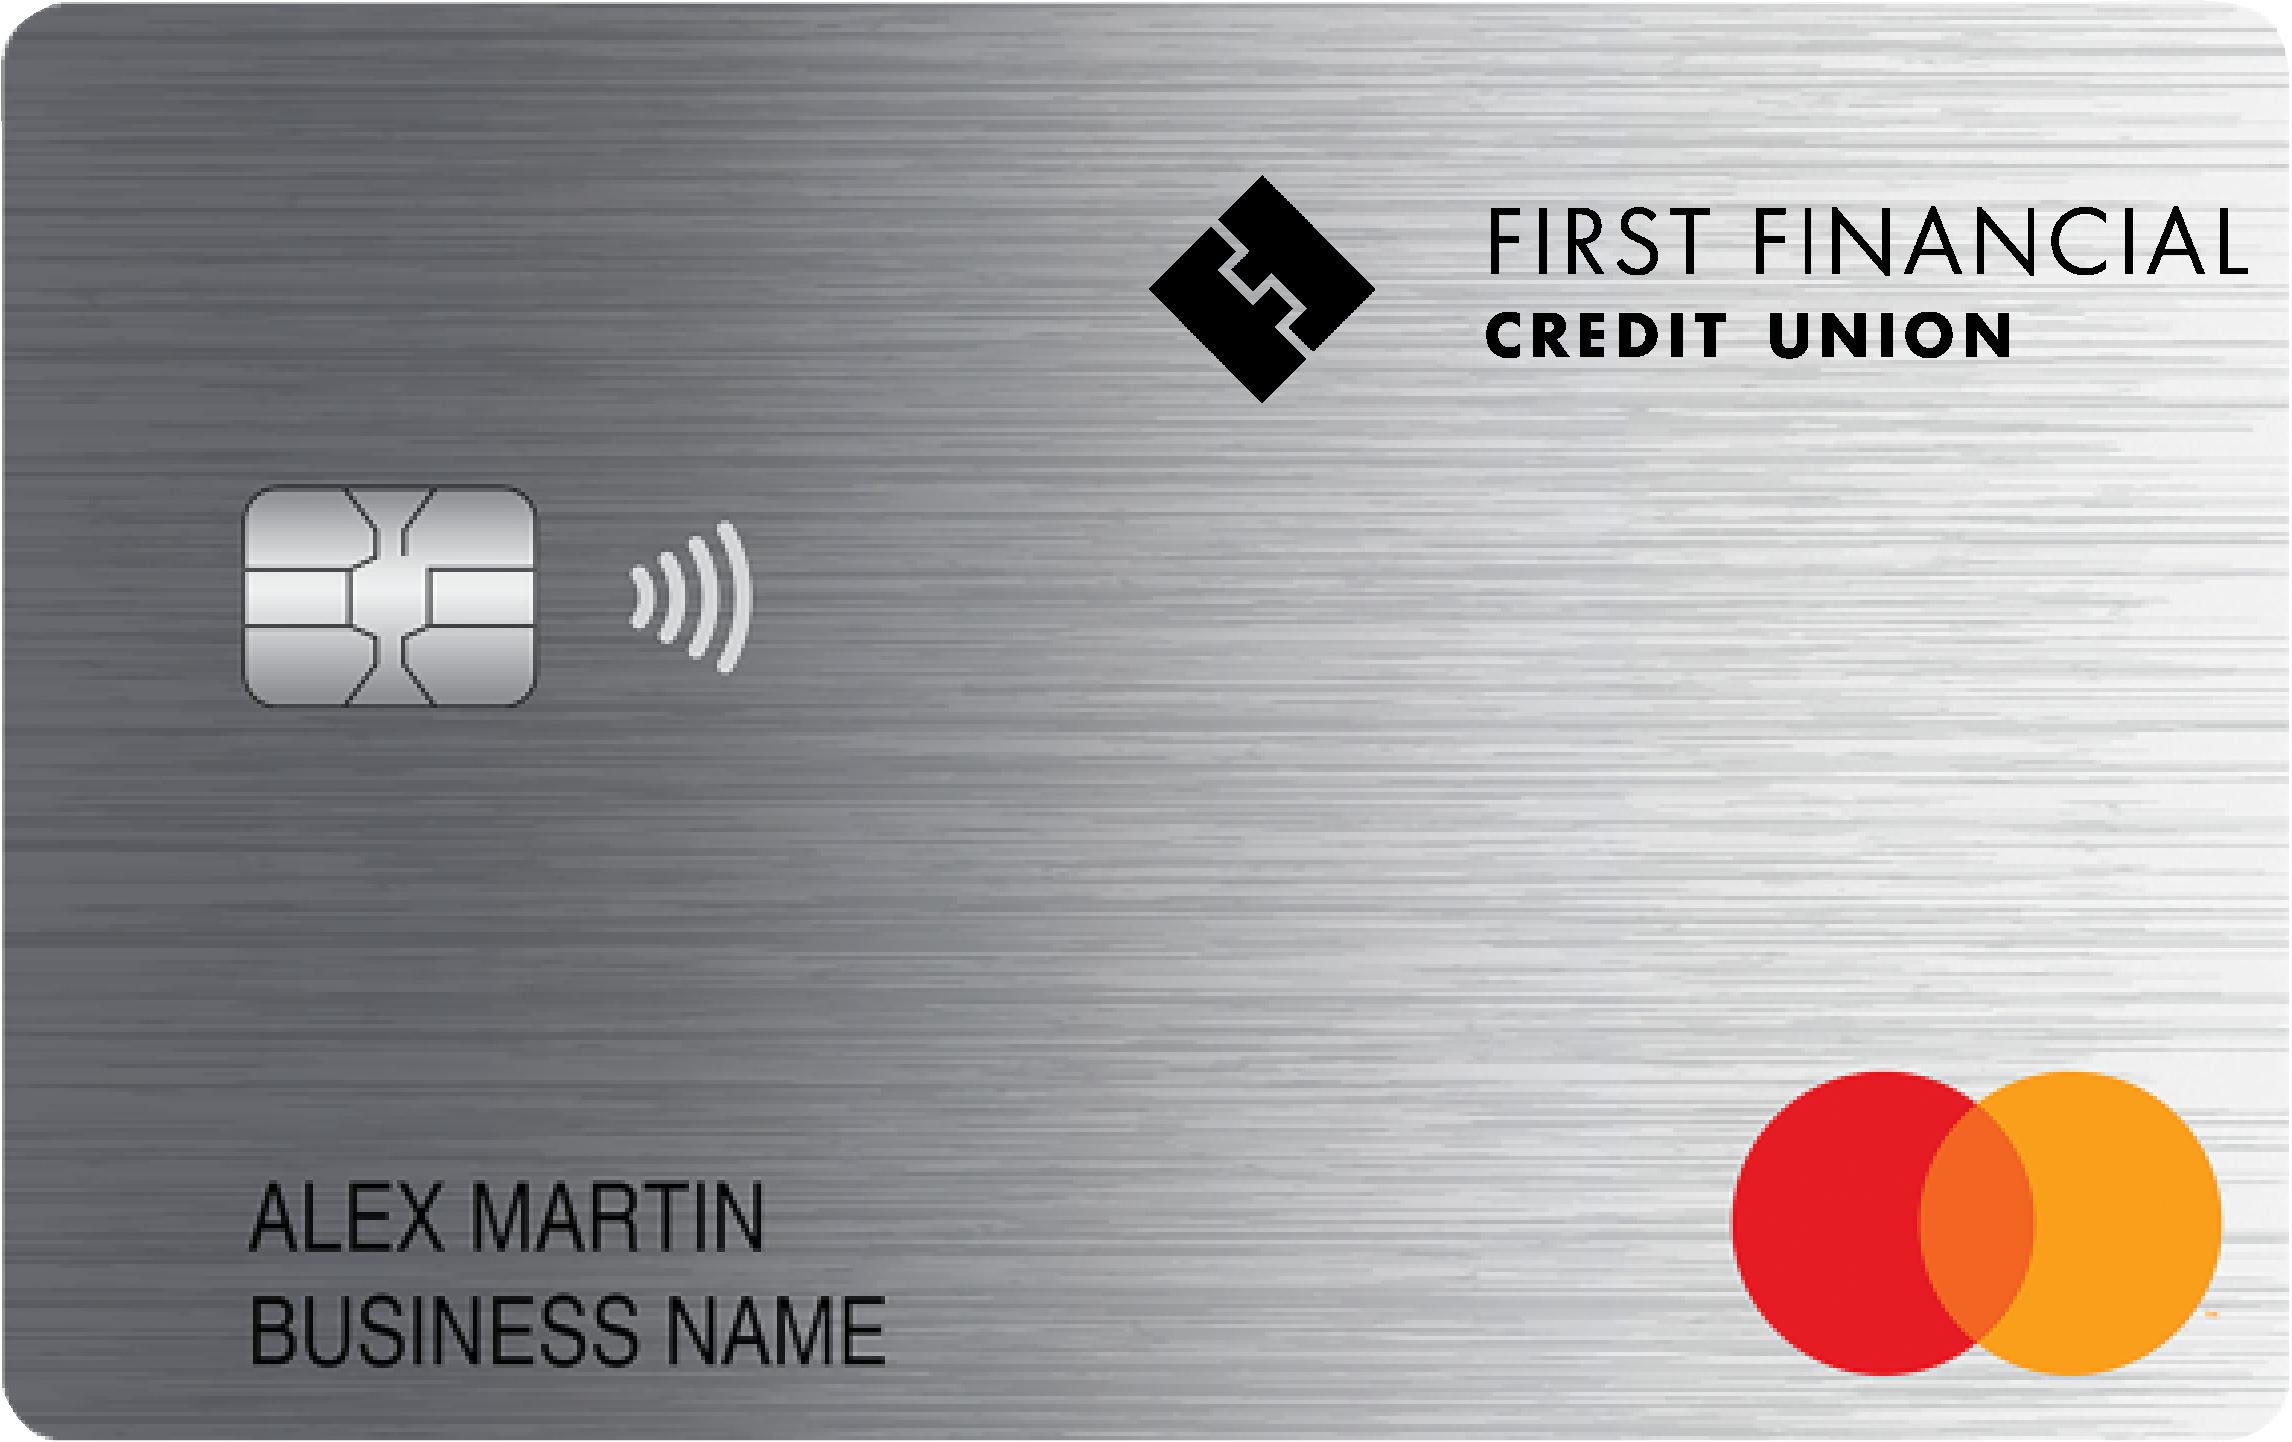 First Financial Credit Union Smart Business Rewards Card